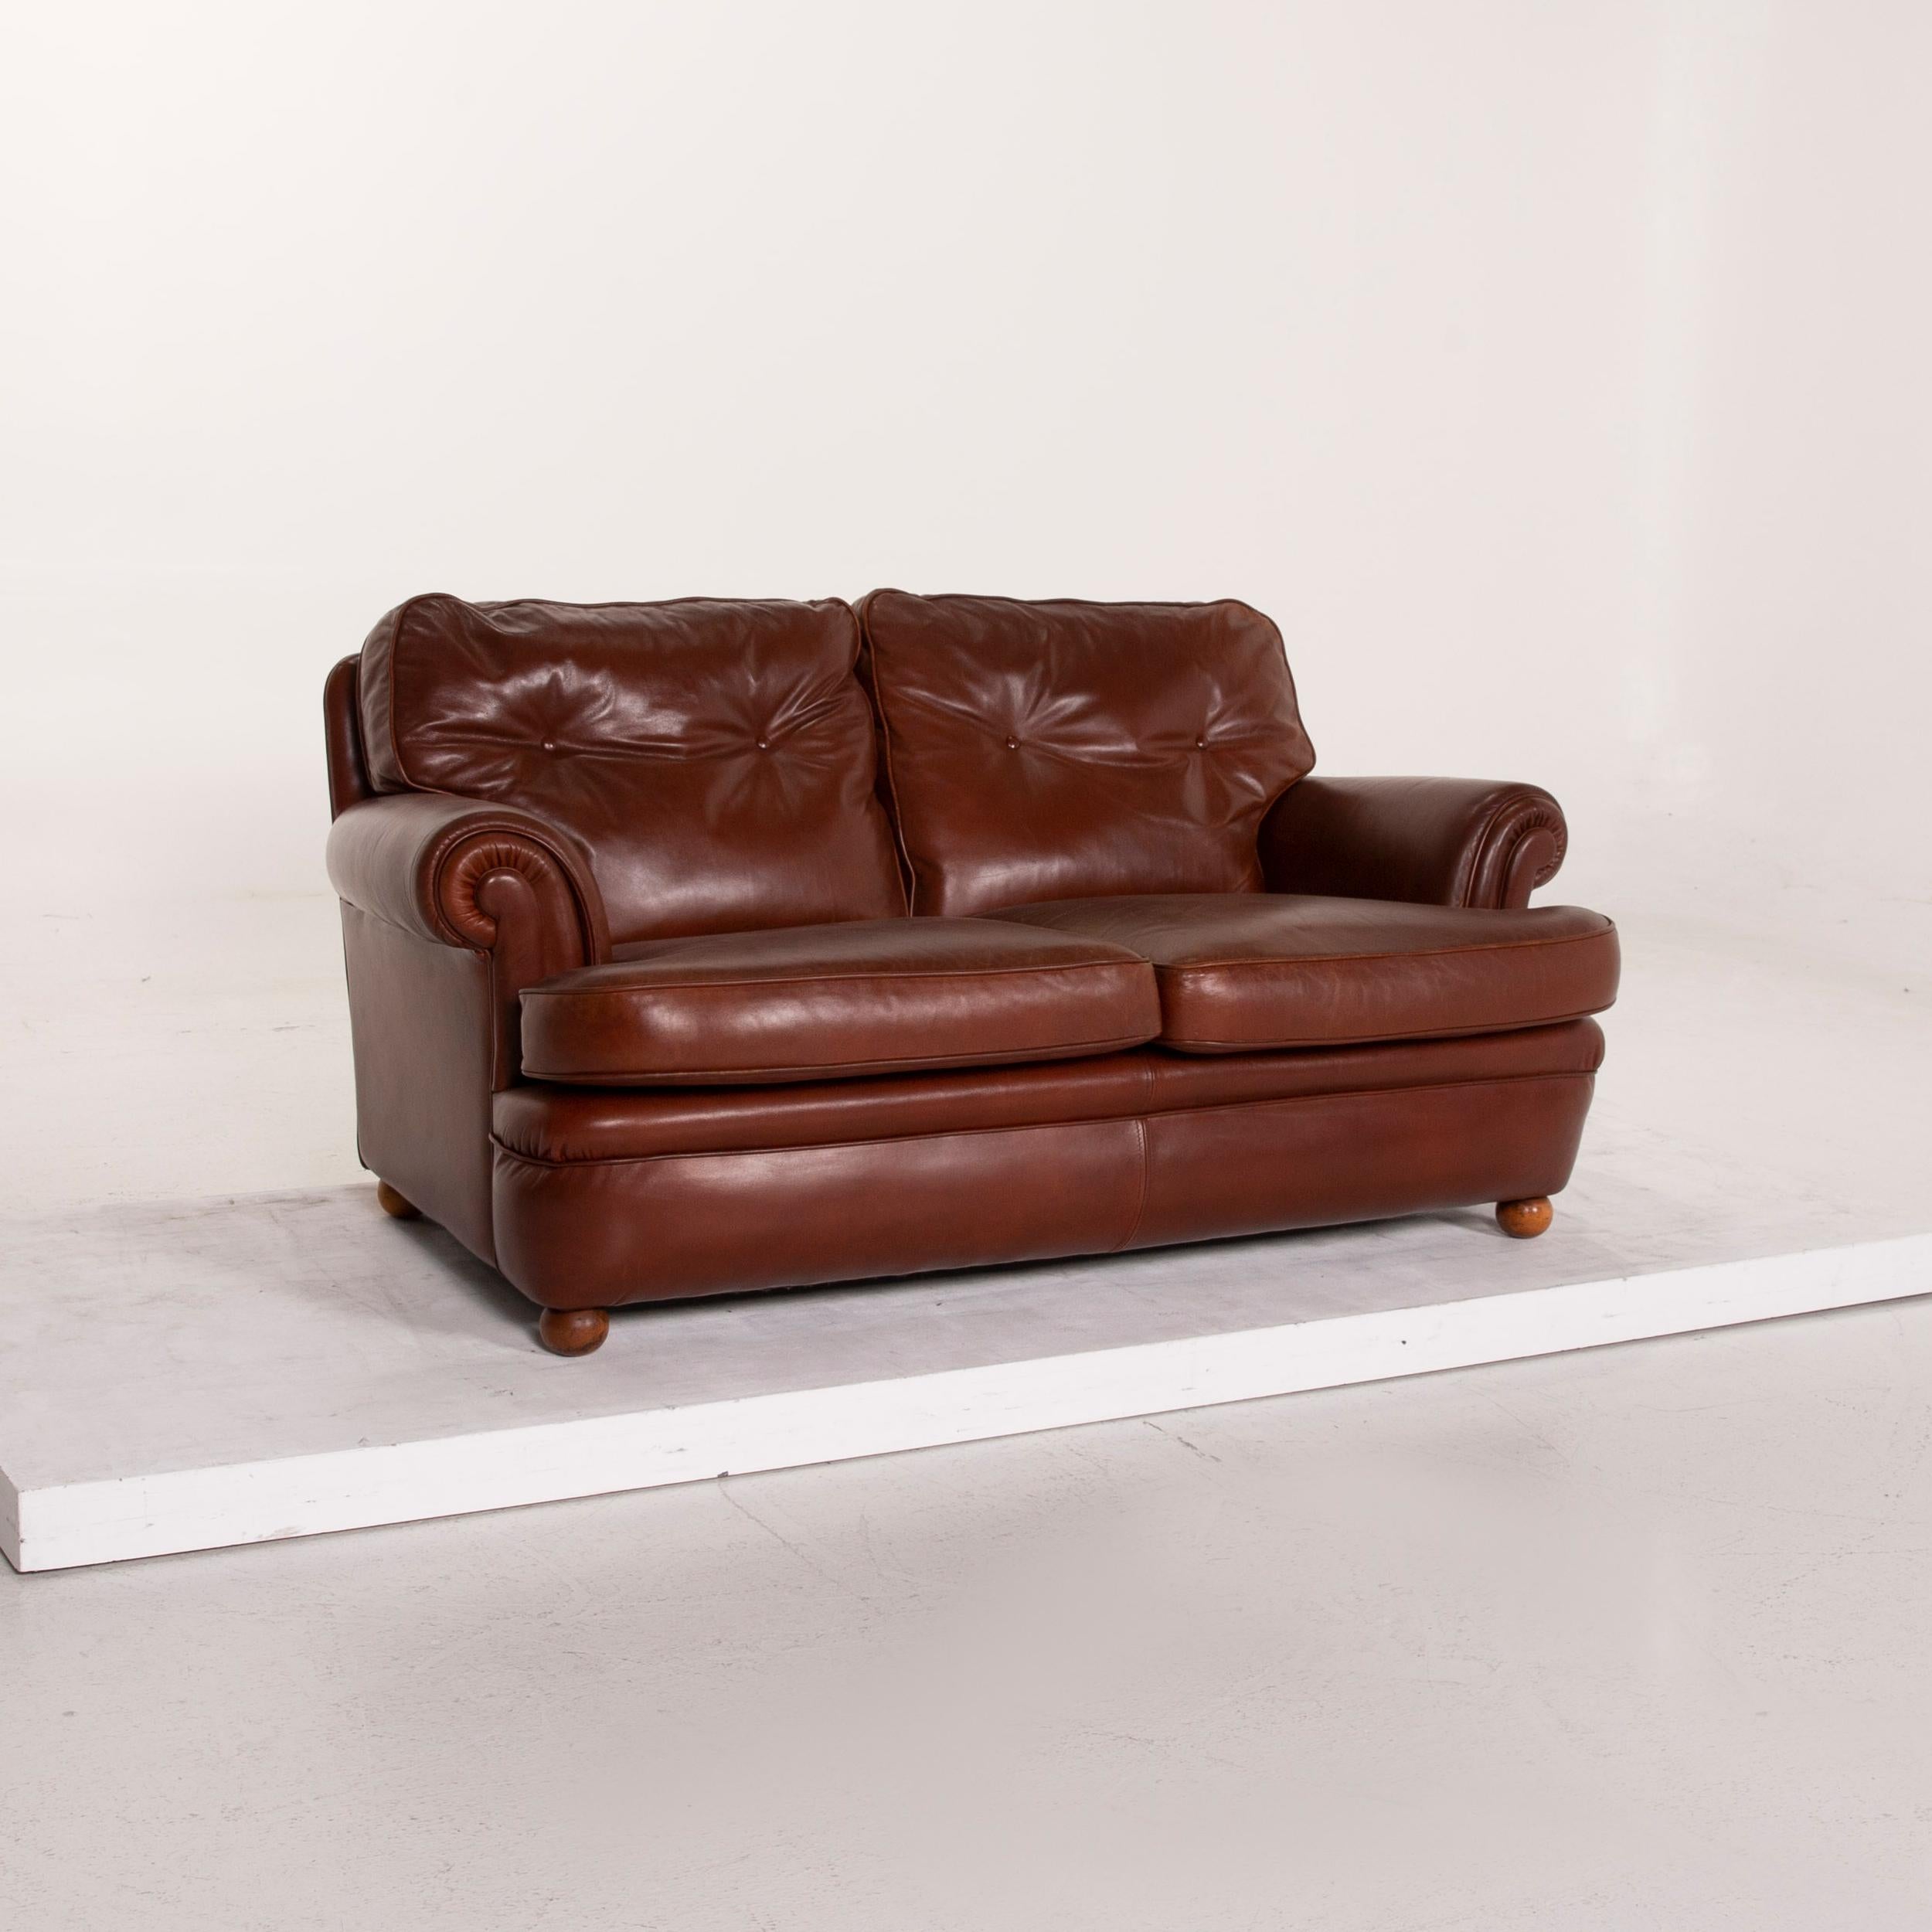 Contemporary Poltrona Frau Leather Sofa Cognac Two-Seat